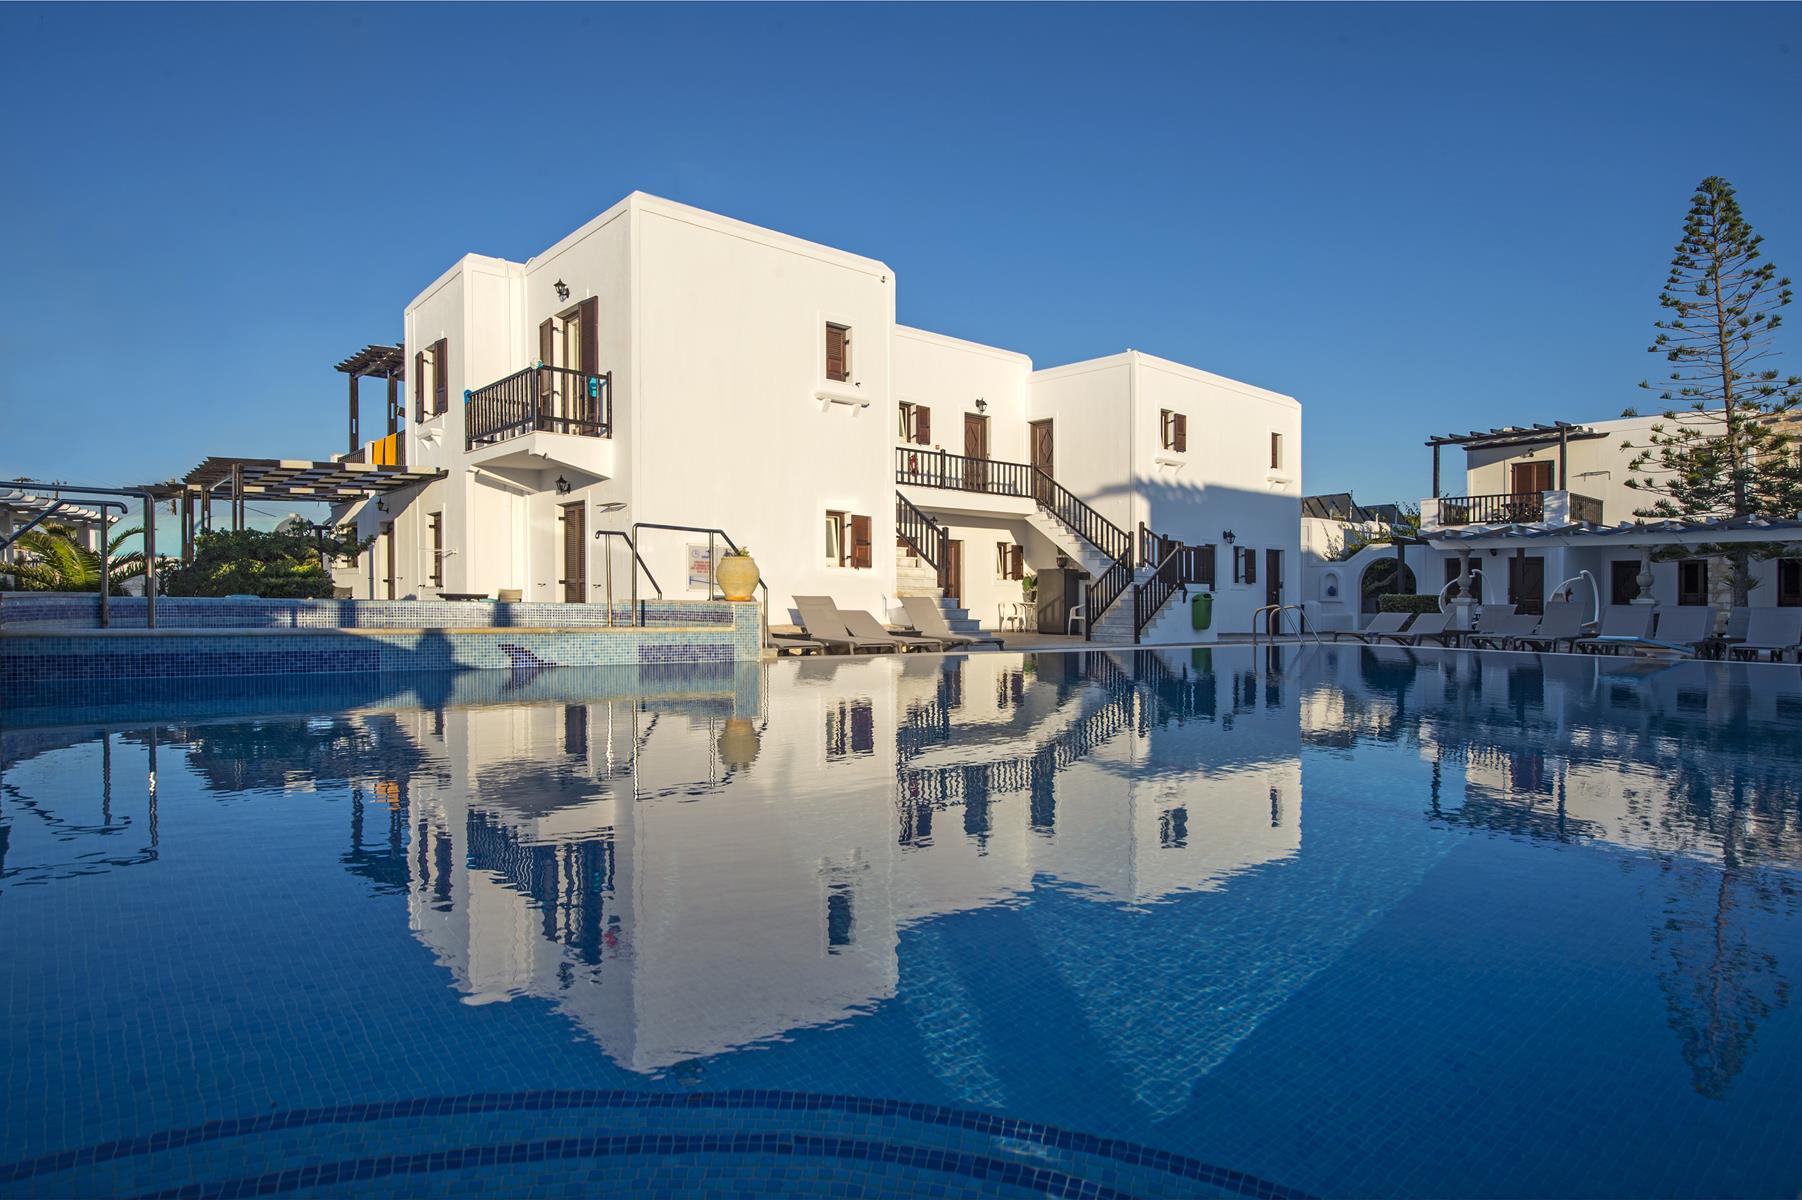 Hotels in Paros | Contaratos Beach Hotel | Paros Greek Island